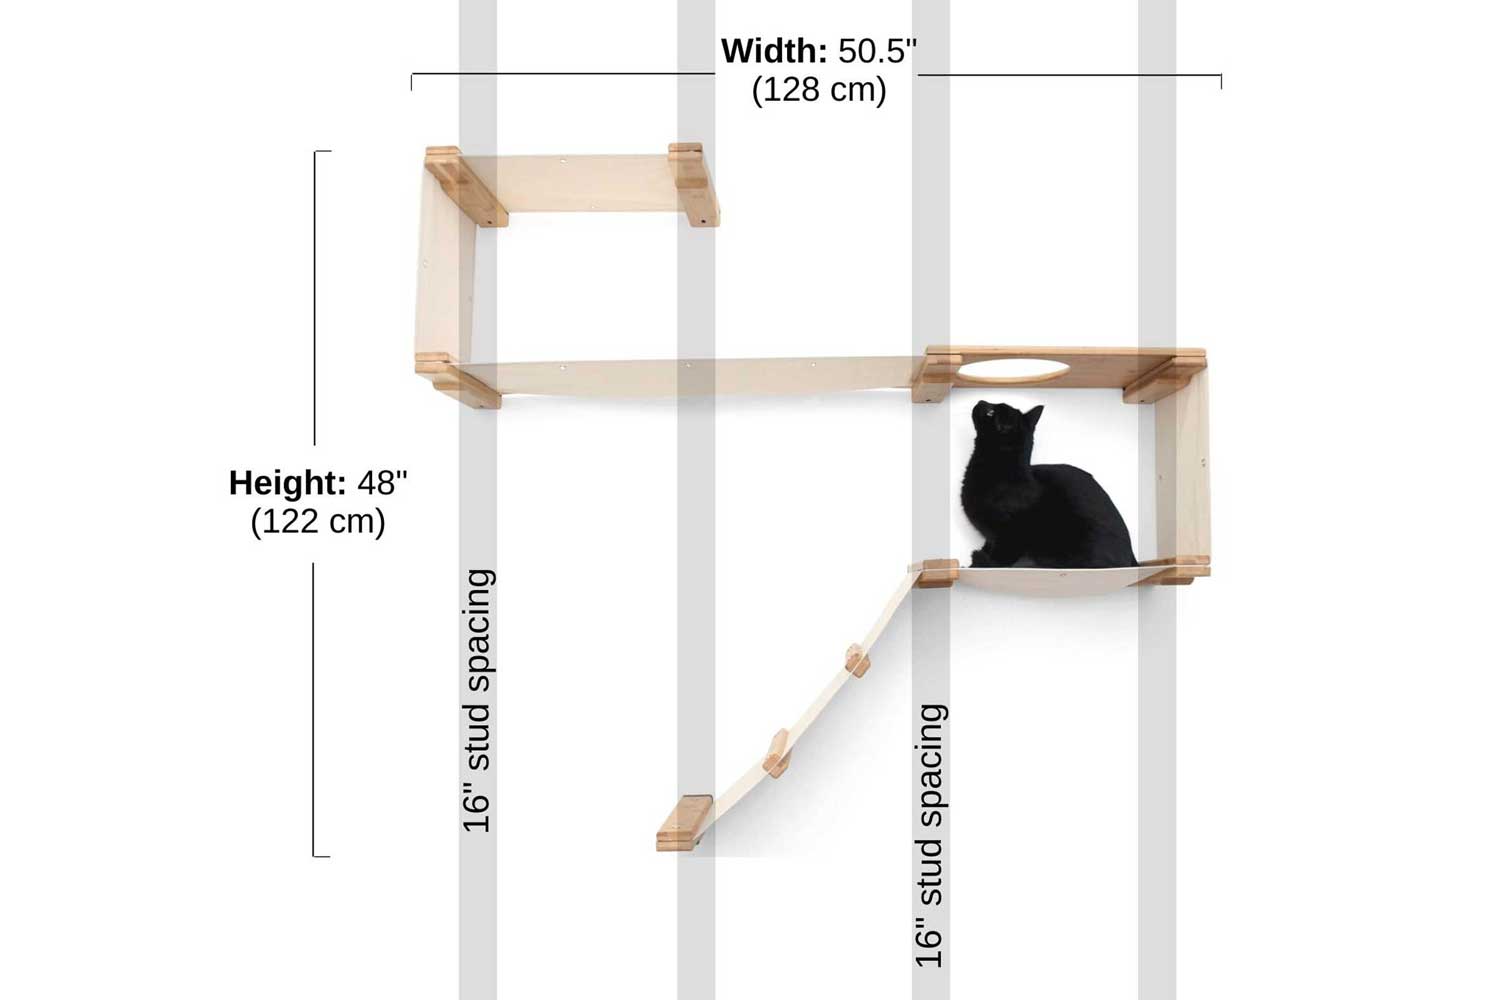 The Play Cat Condo measurements